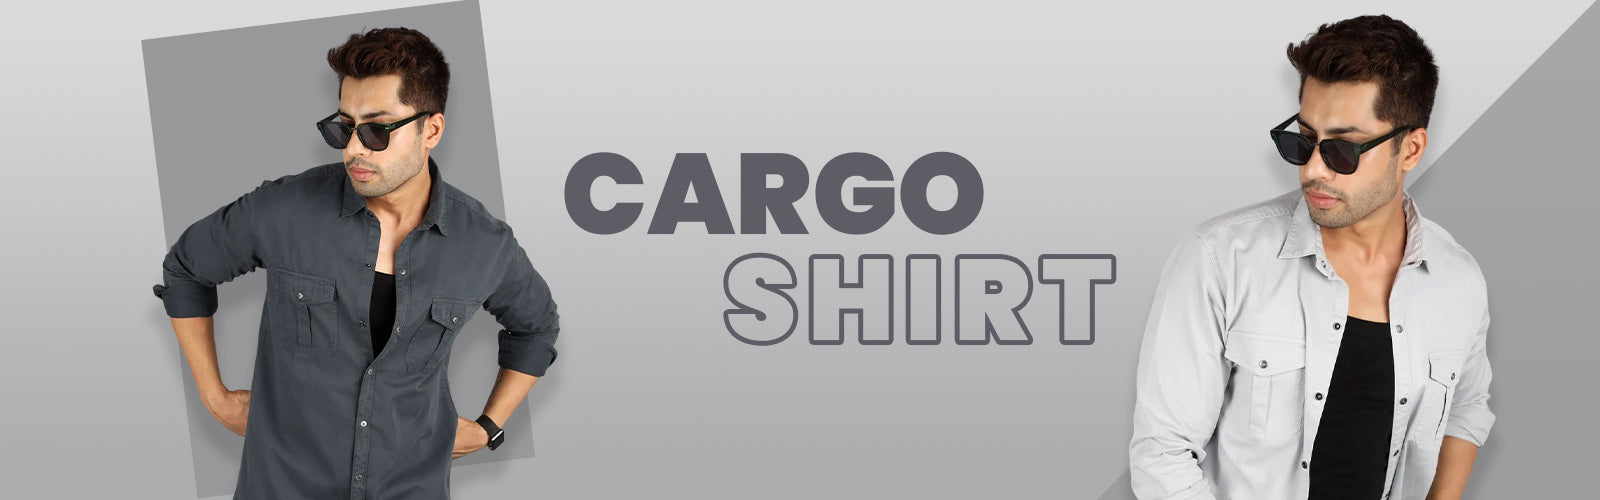 Cargo shirt